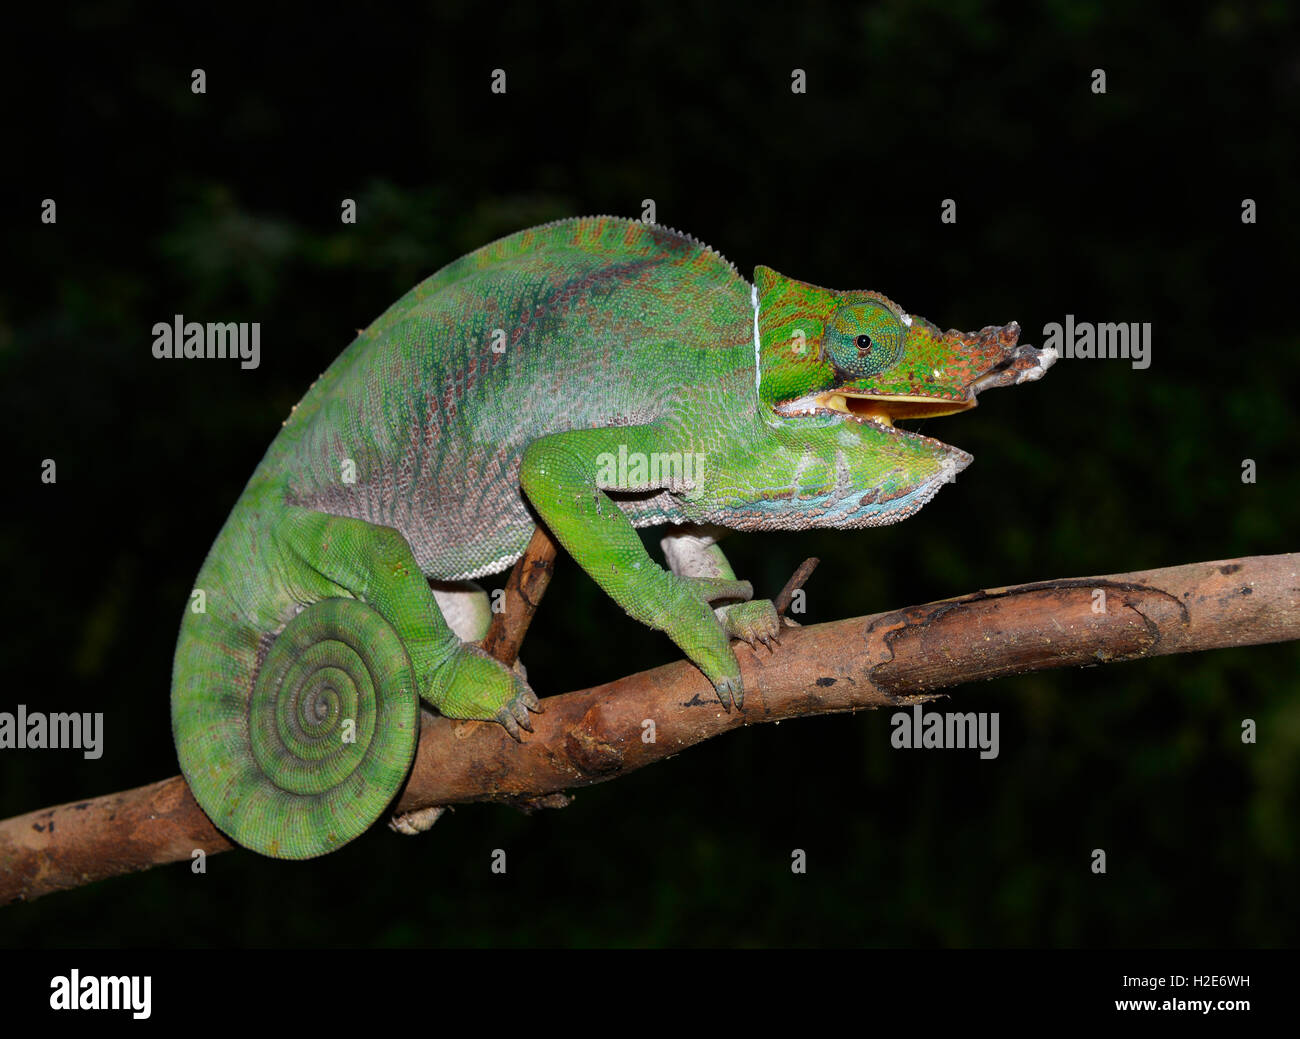 Two-banded or rainforest chameleon (Furcifer balteatus), rainforest, Ranomafana, eastern Madagascar Stock Photo